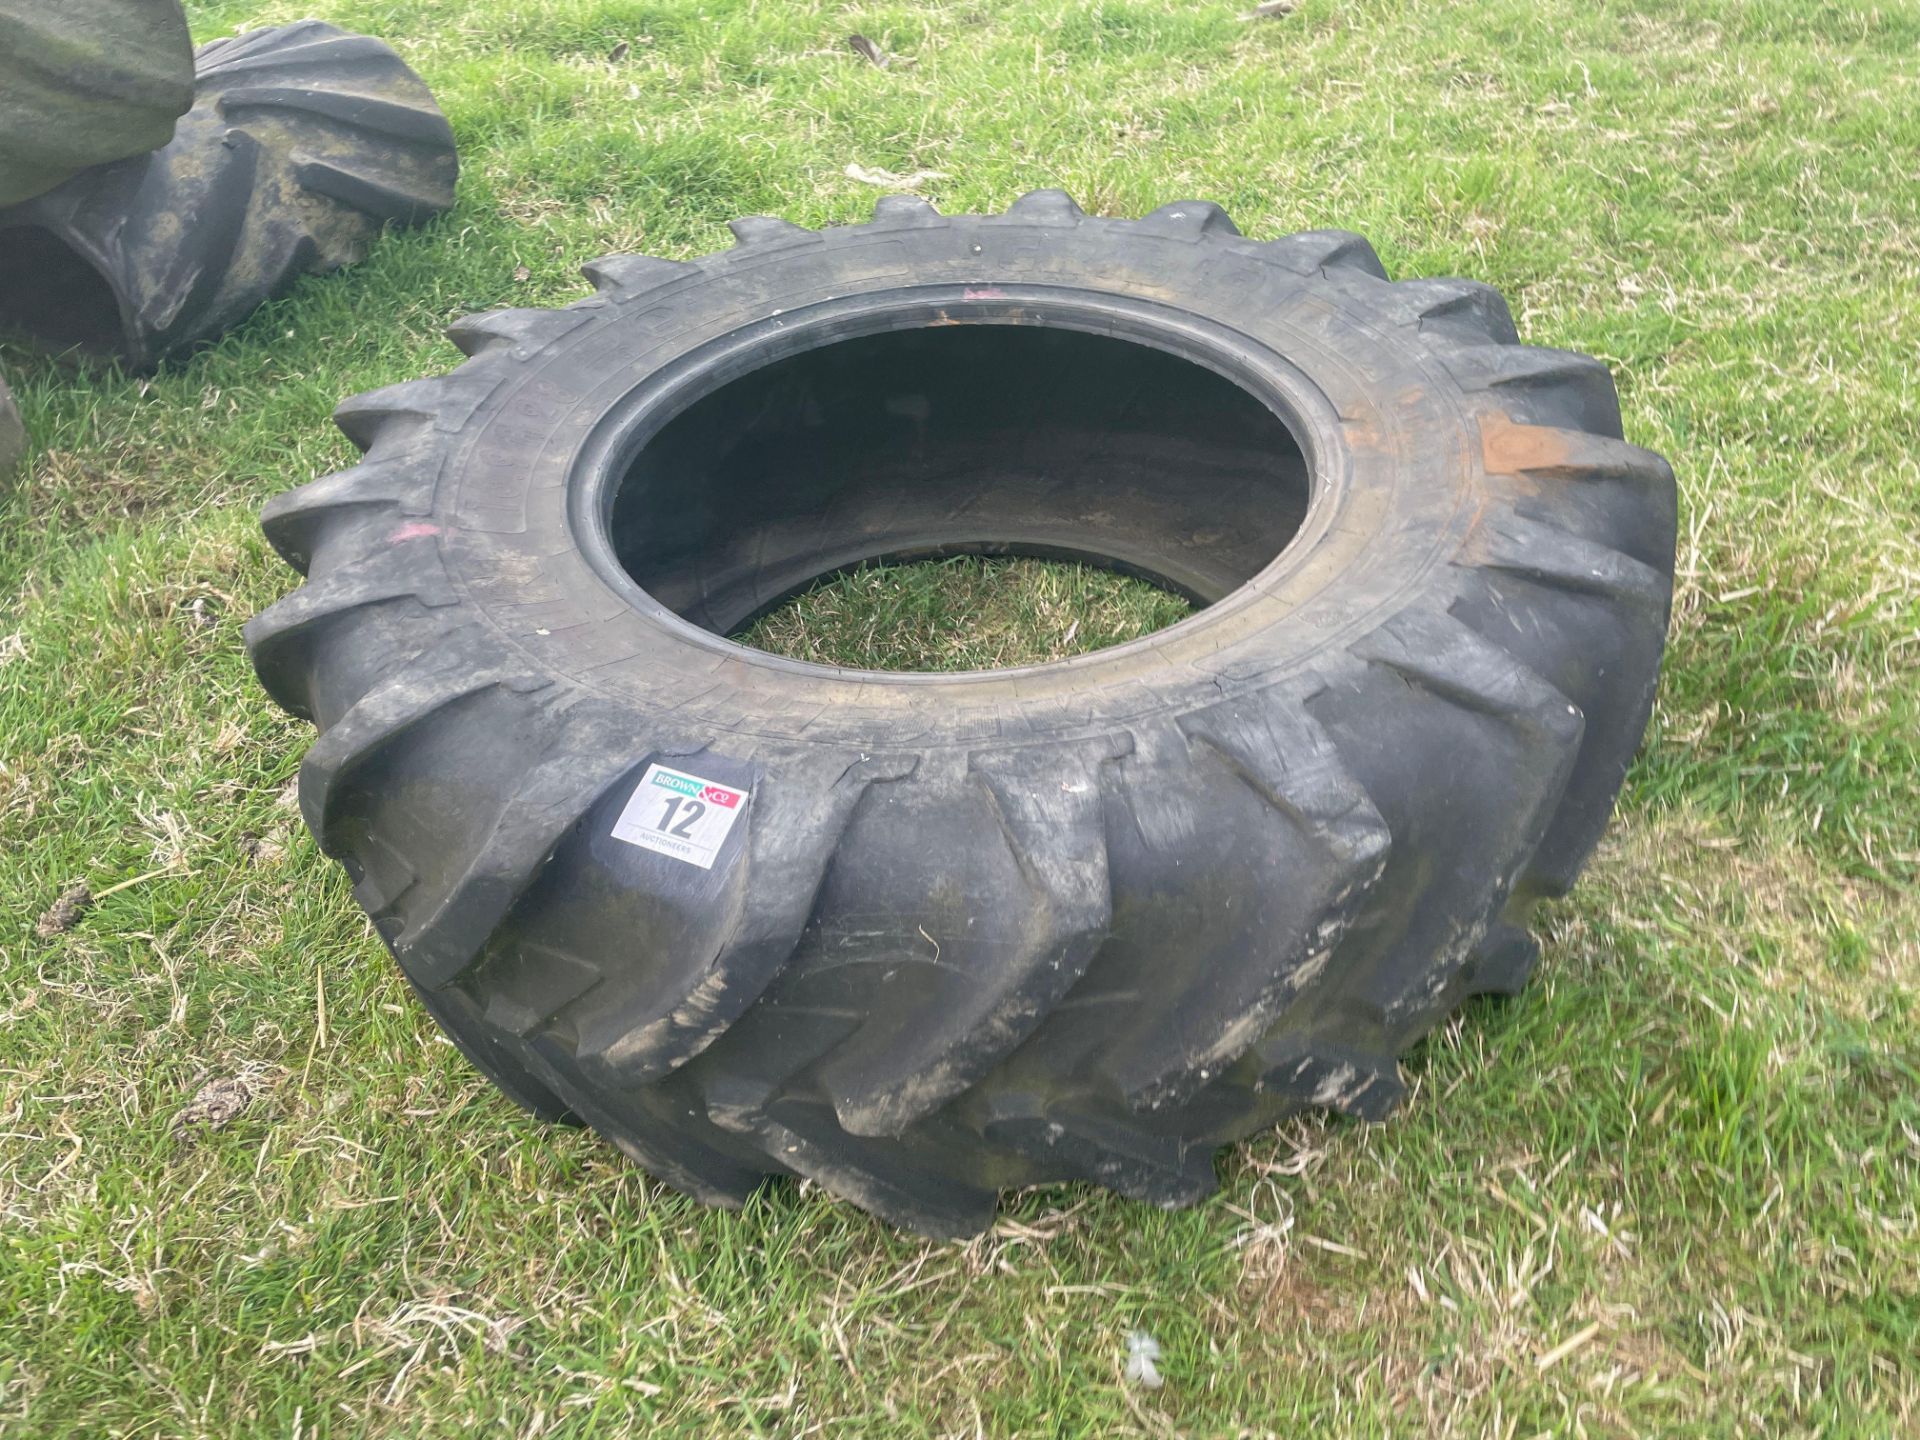 Single 16.9R28 tyre